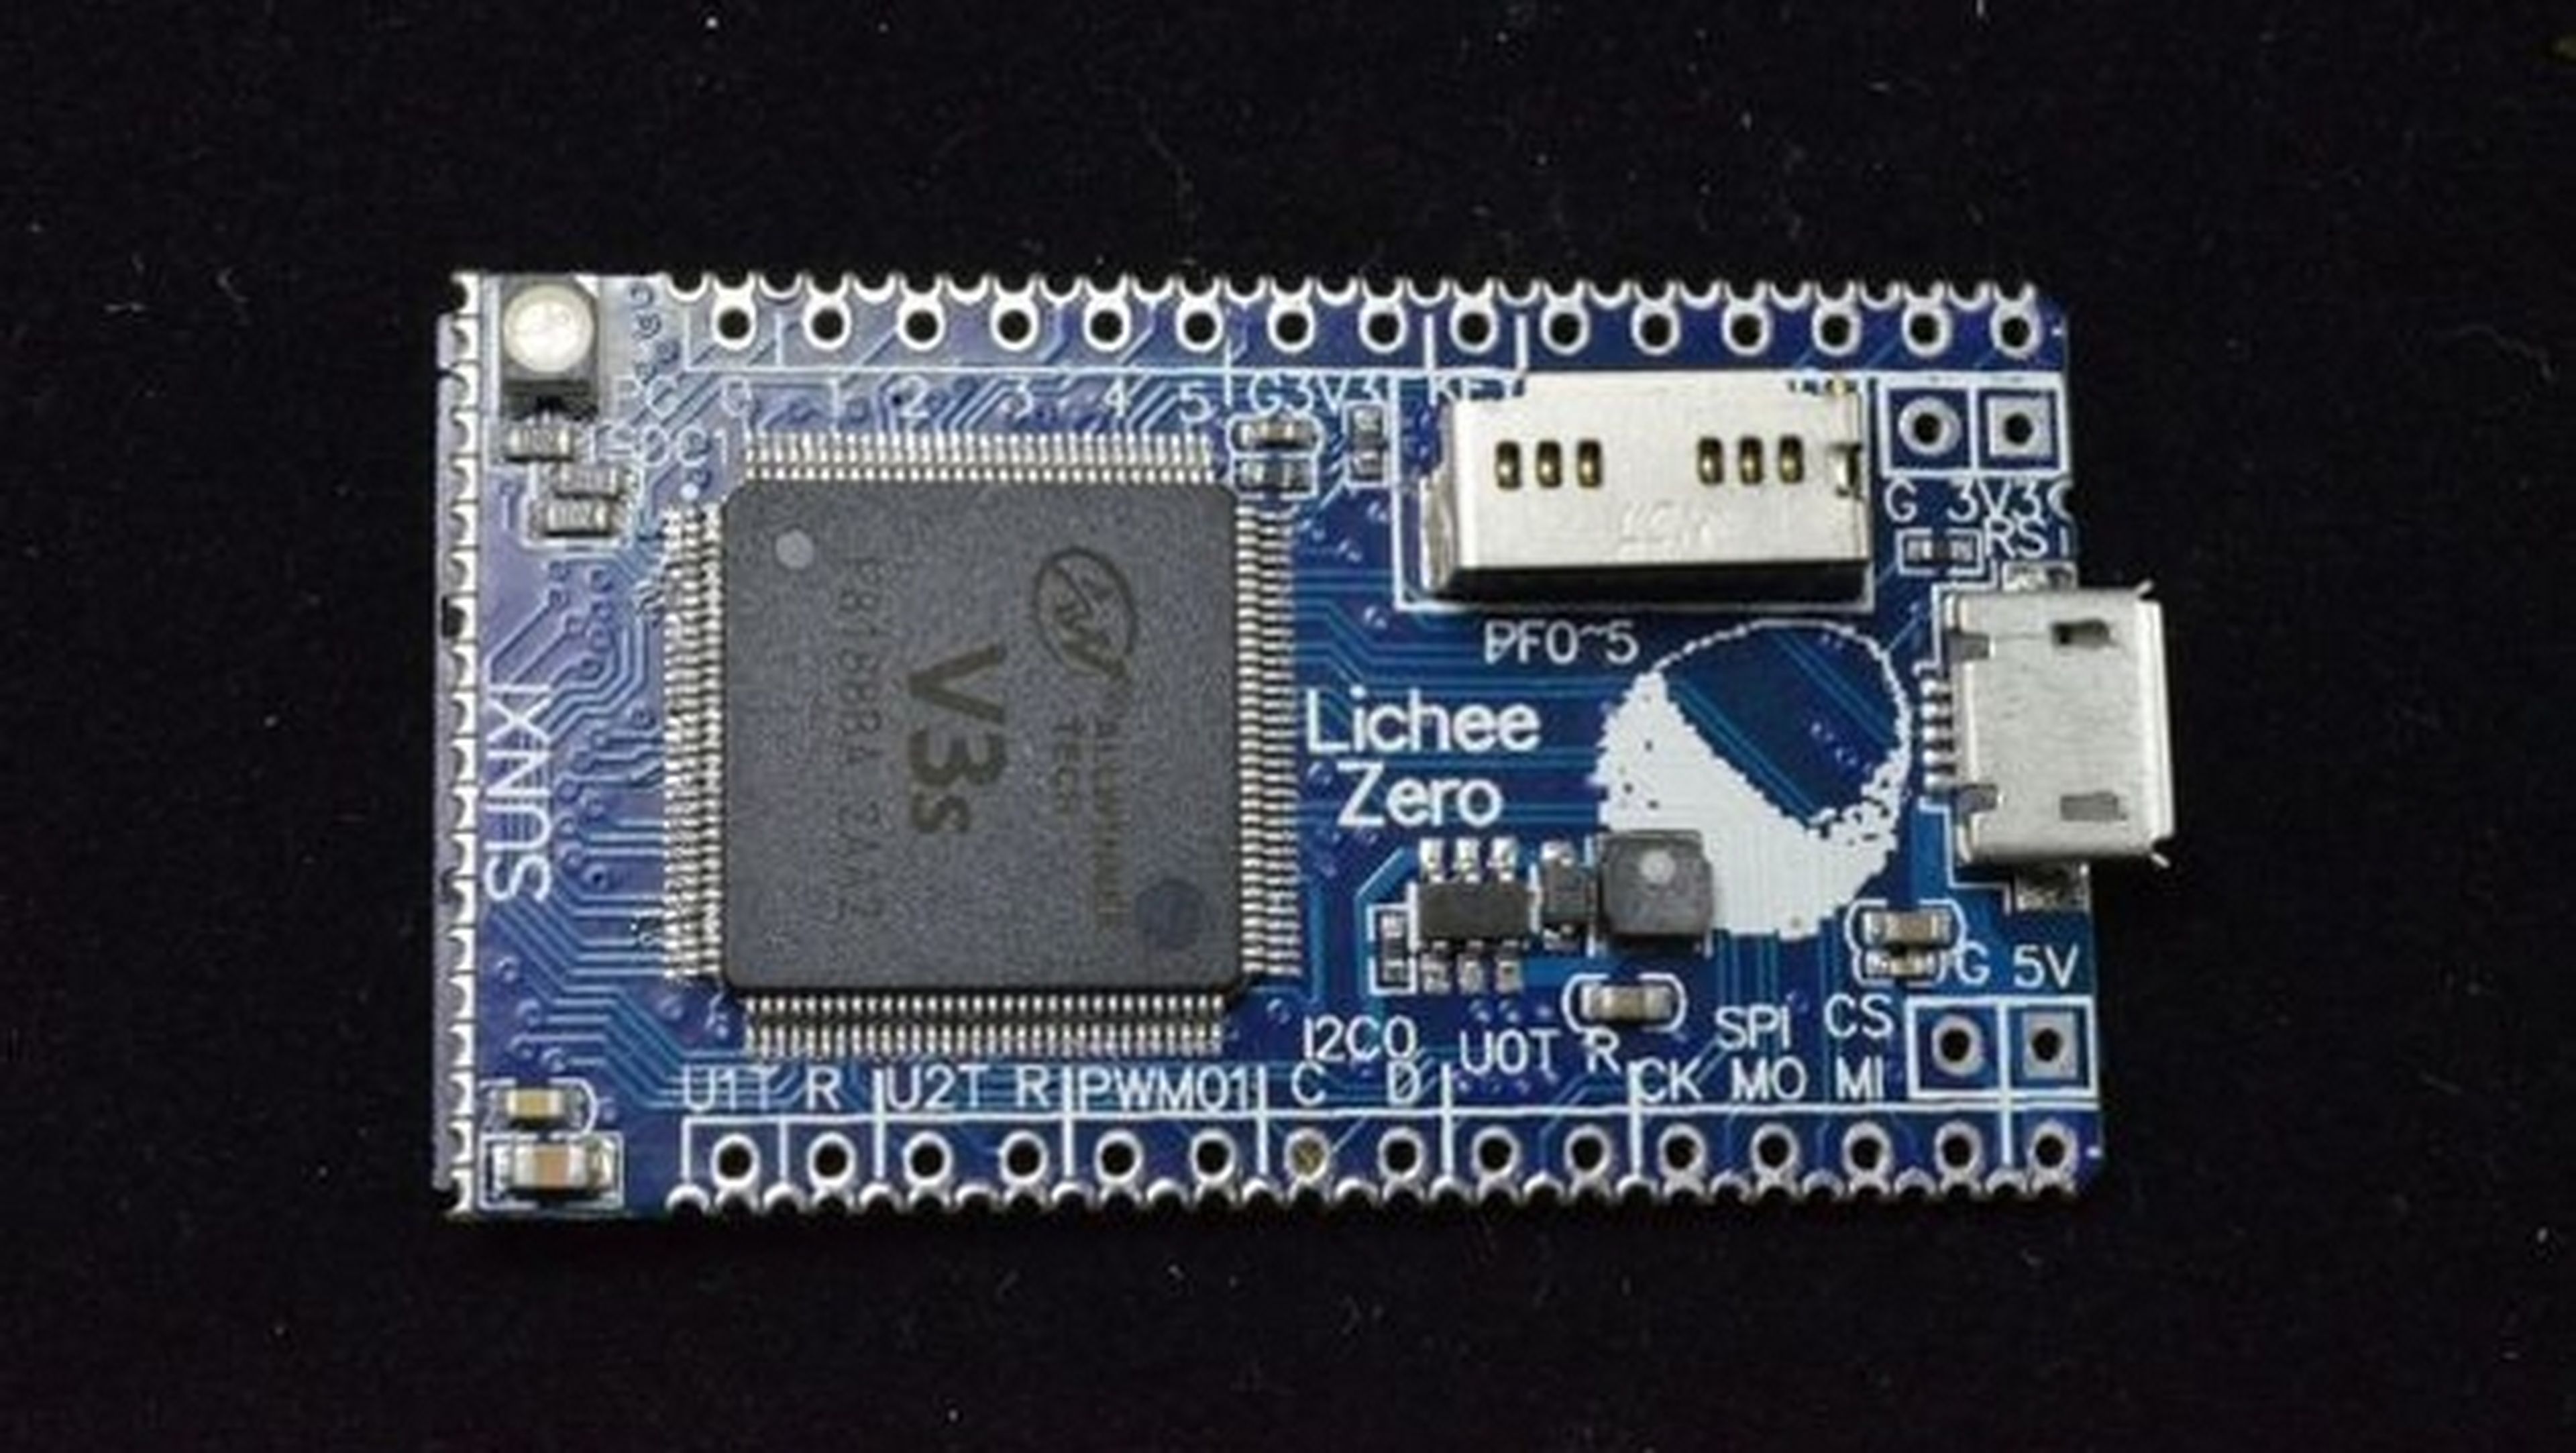 Lichee Pi Zero, un micro PC del tamaño de una tarjeta SD, por 5 euros